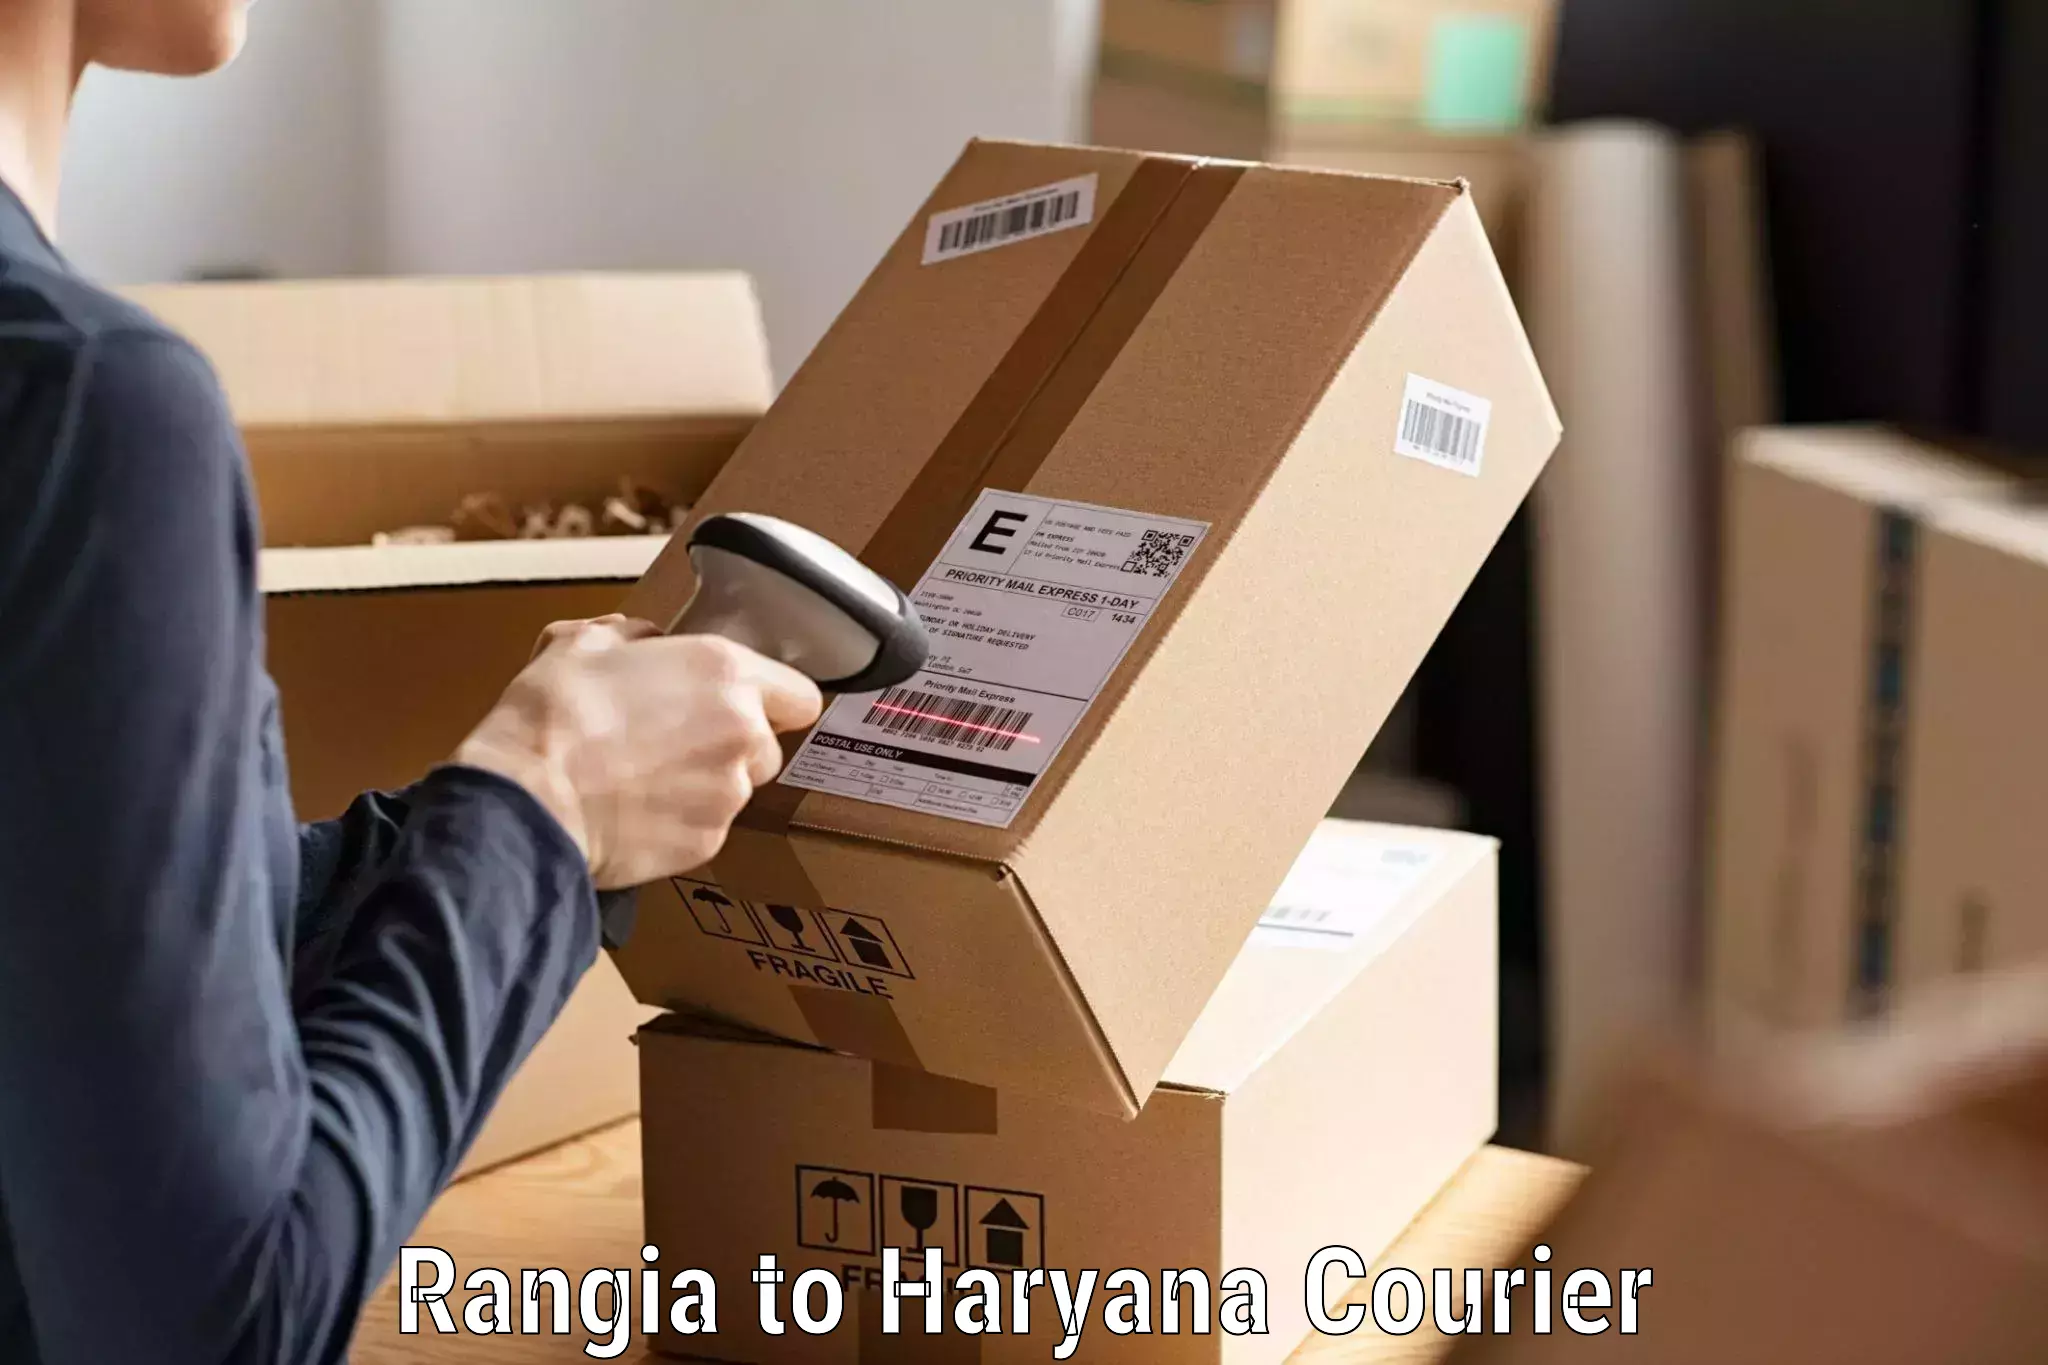 Courier service comparison Rangia to Haryana